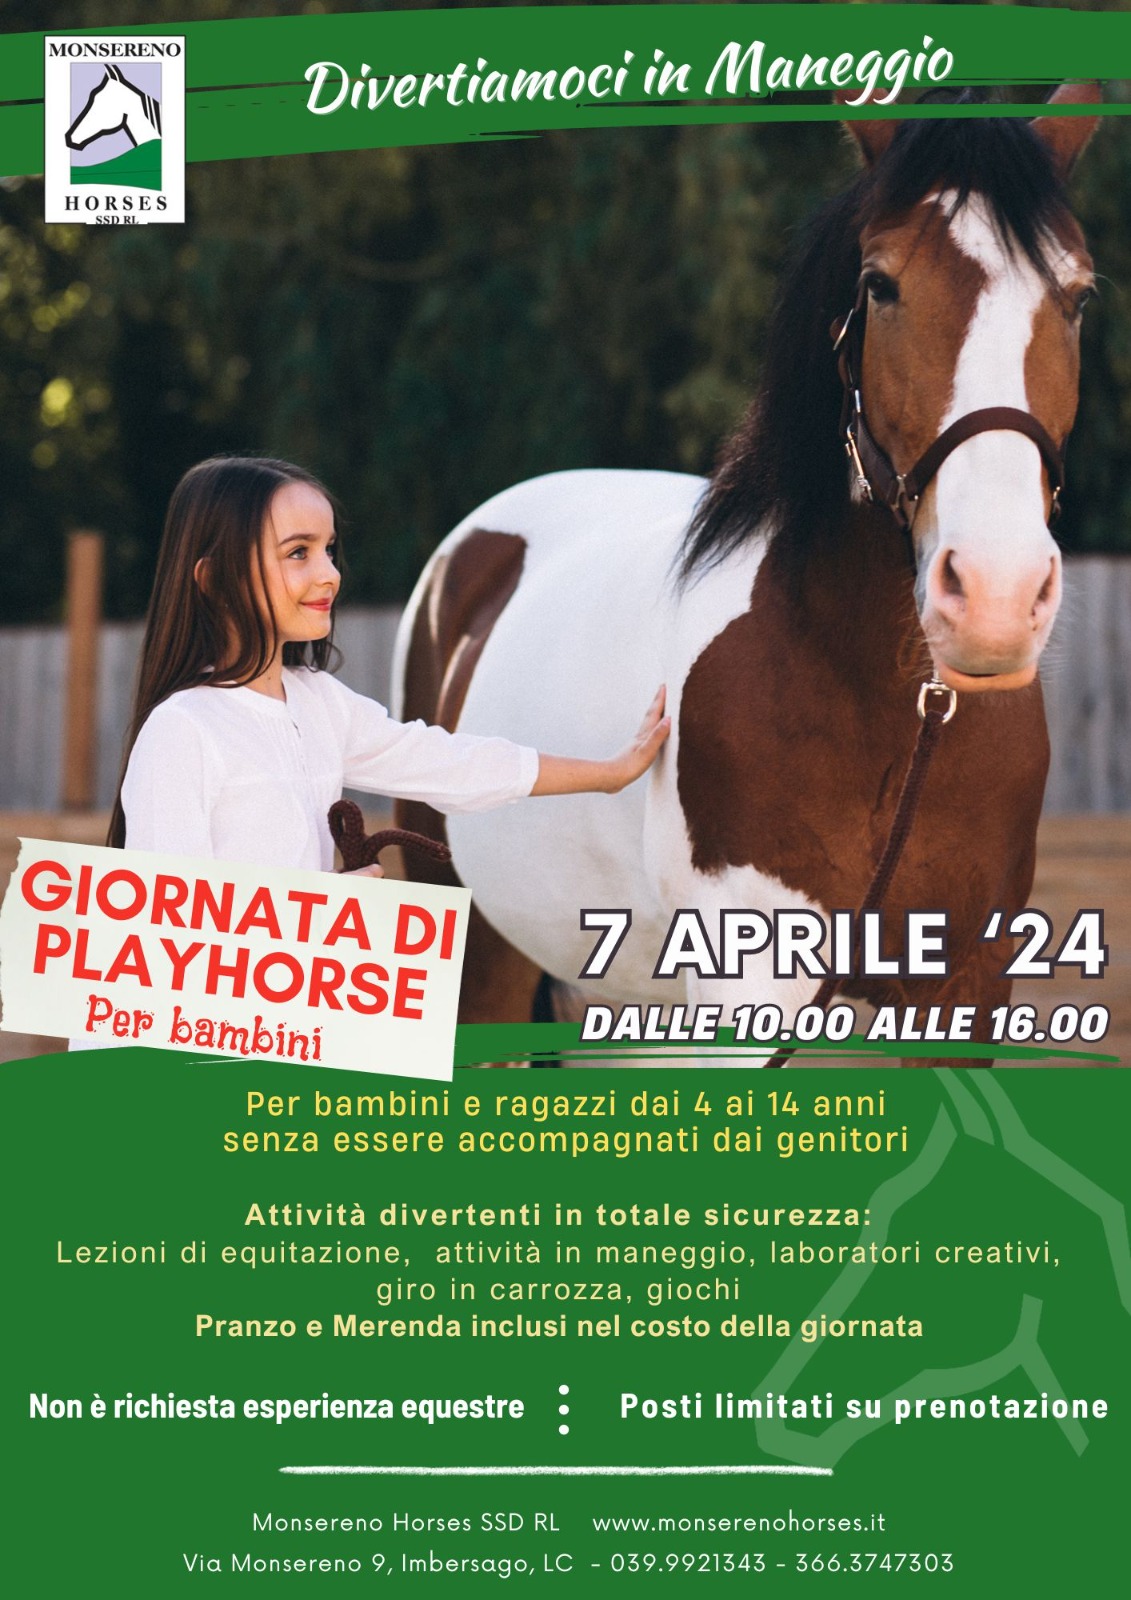 Playhorse per bambini - 7 Aprile Monsereno Horses